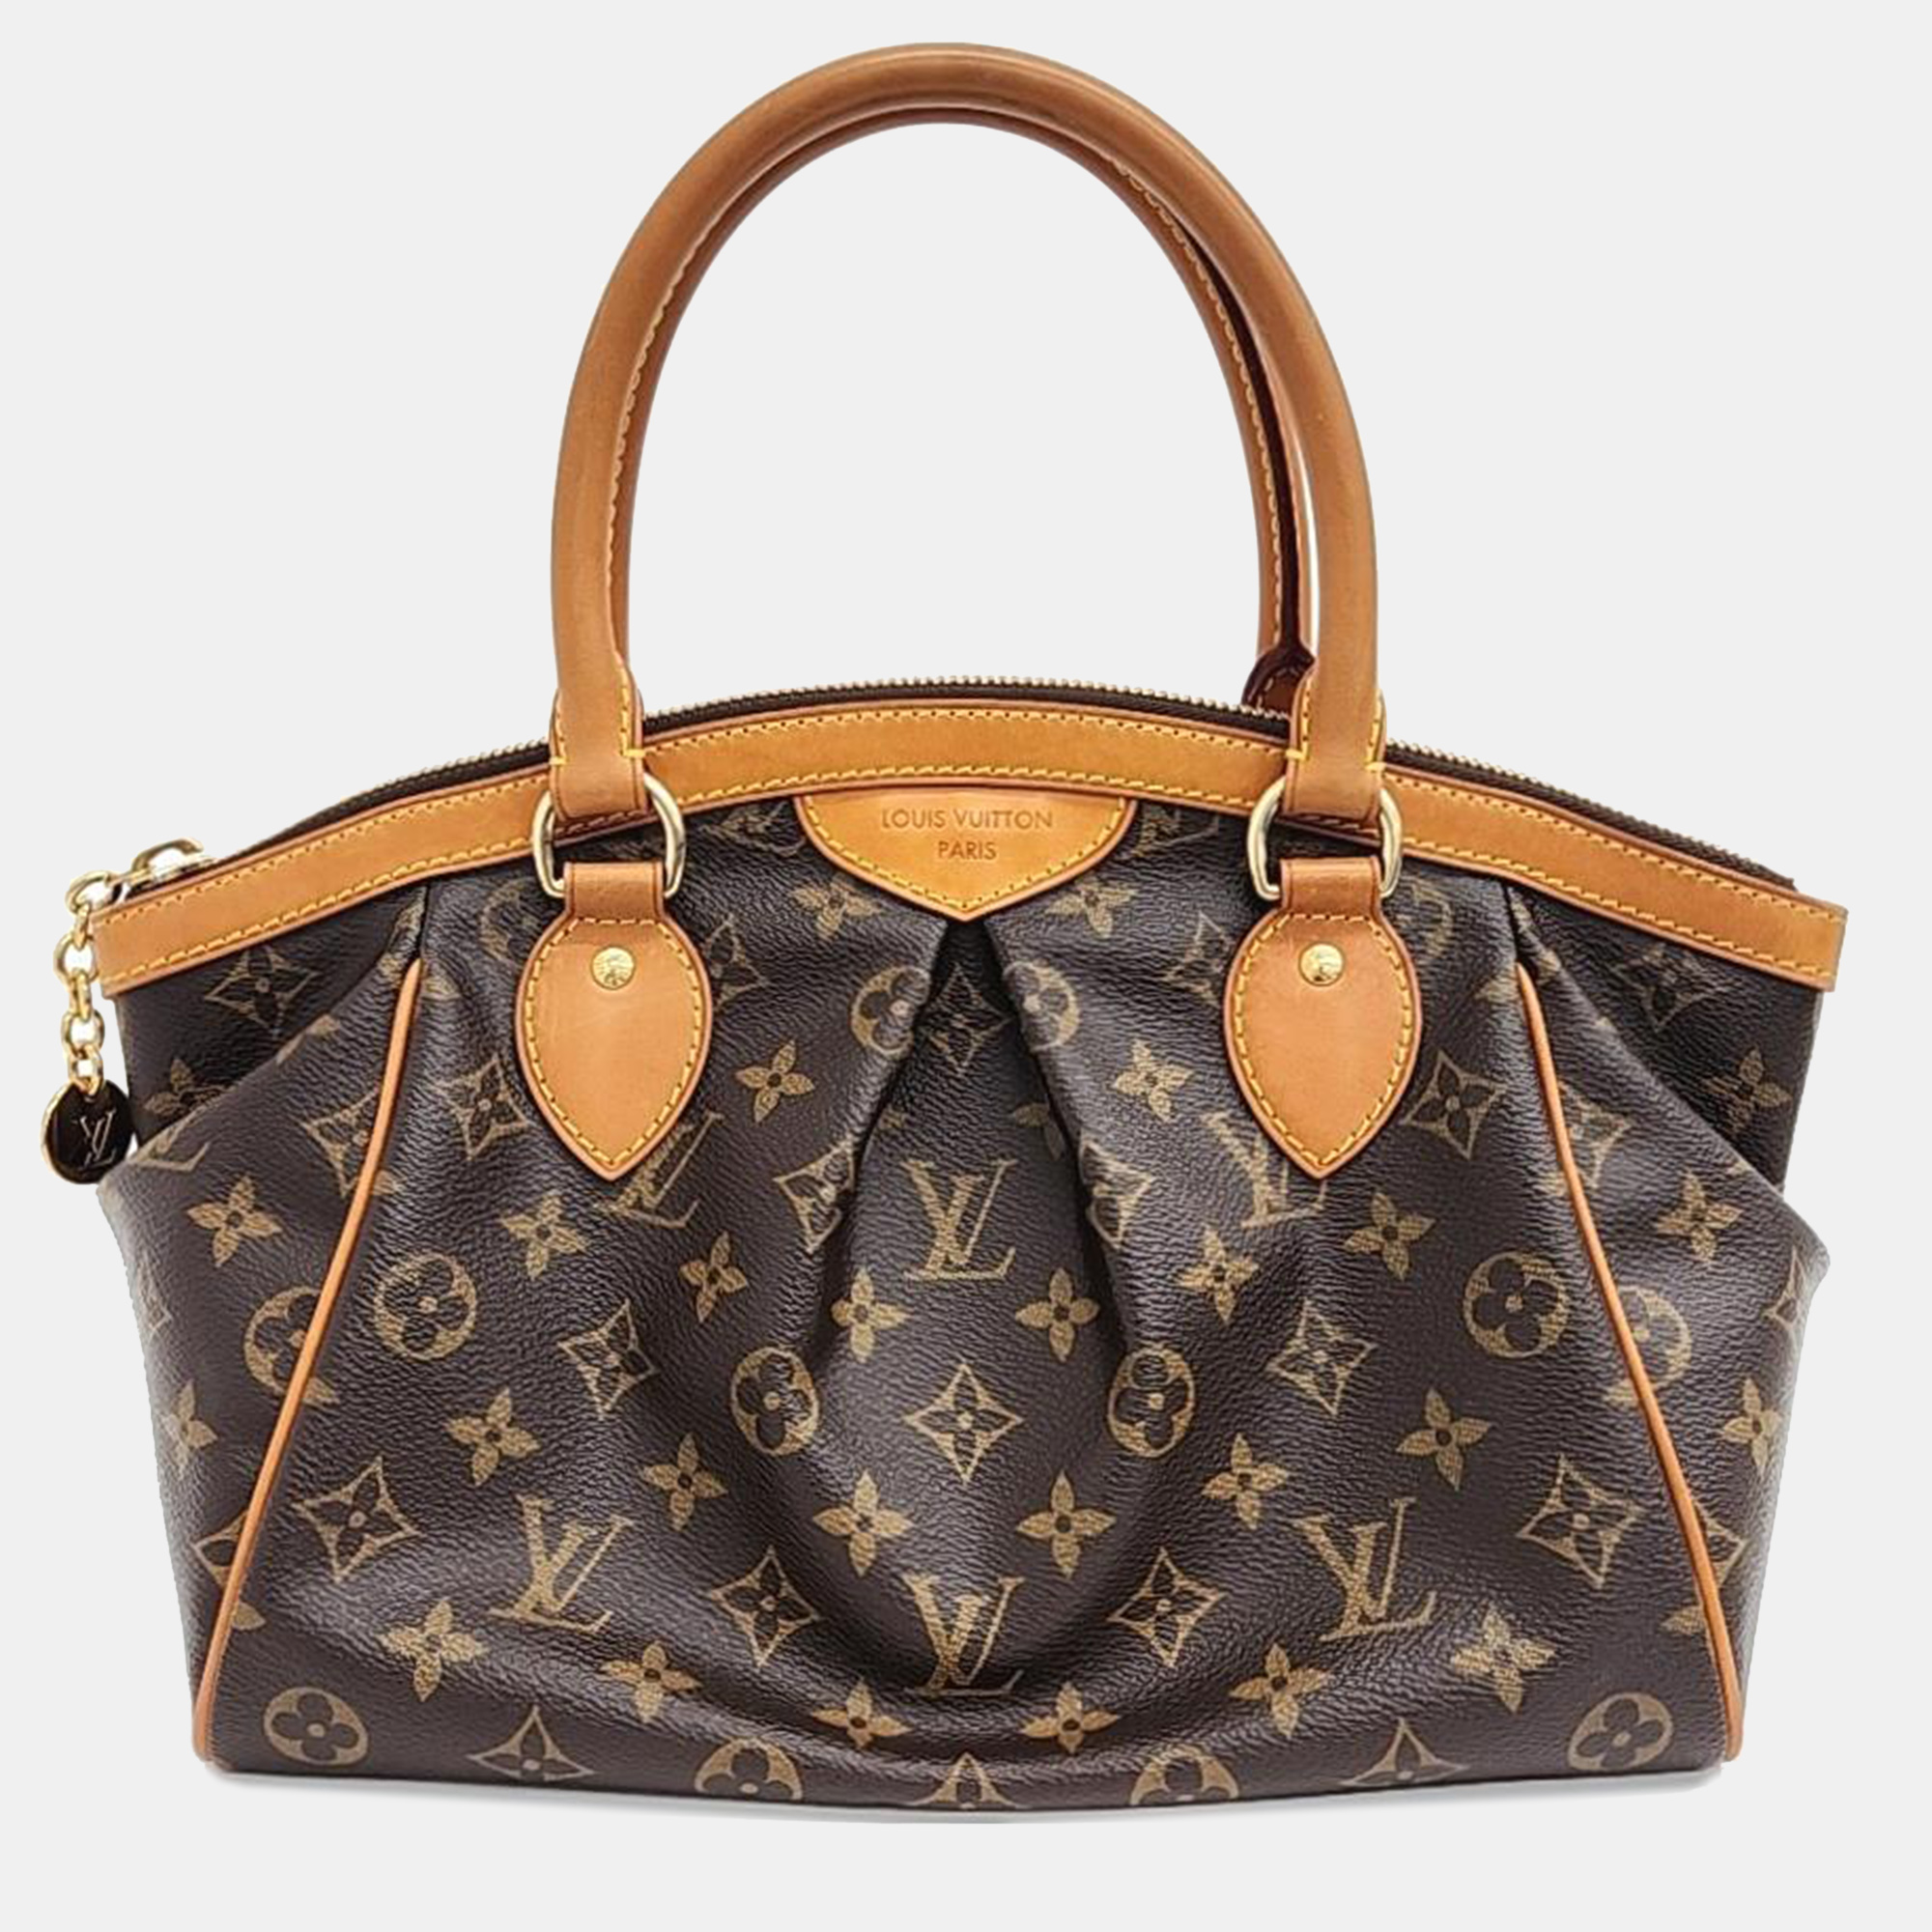 

Louis Vuitton Tivoli PM handbag, Brown